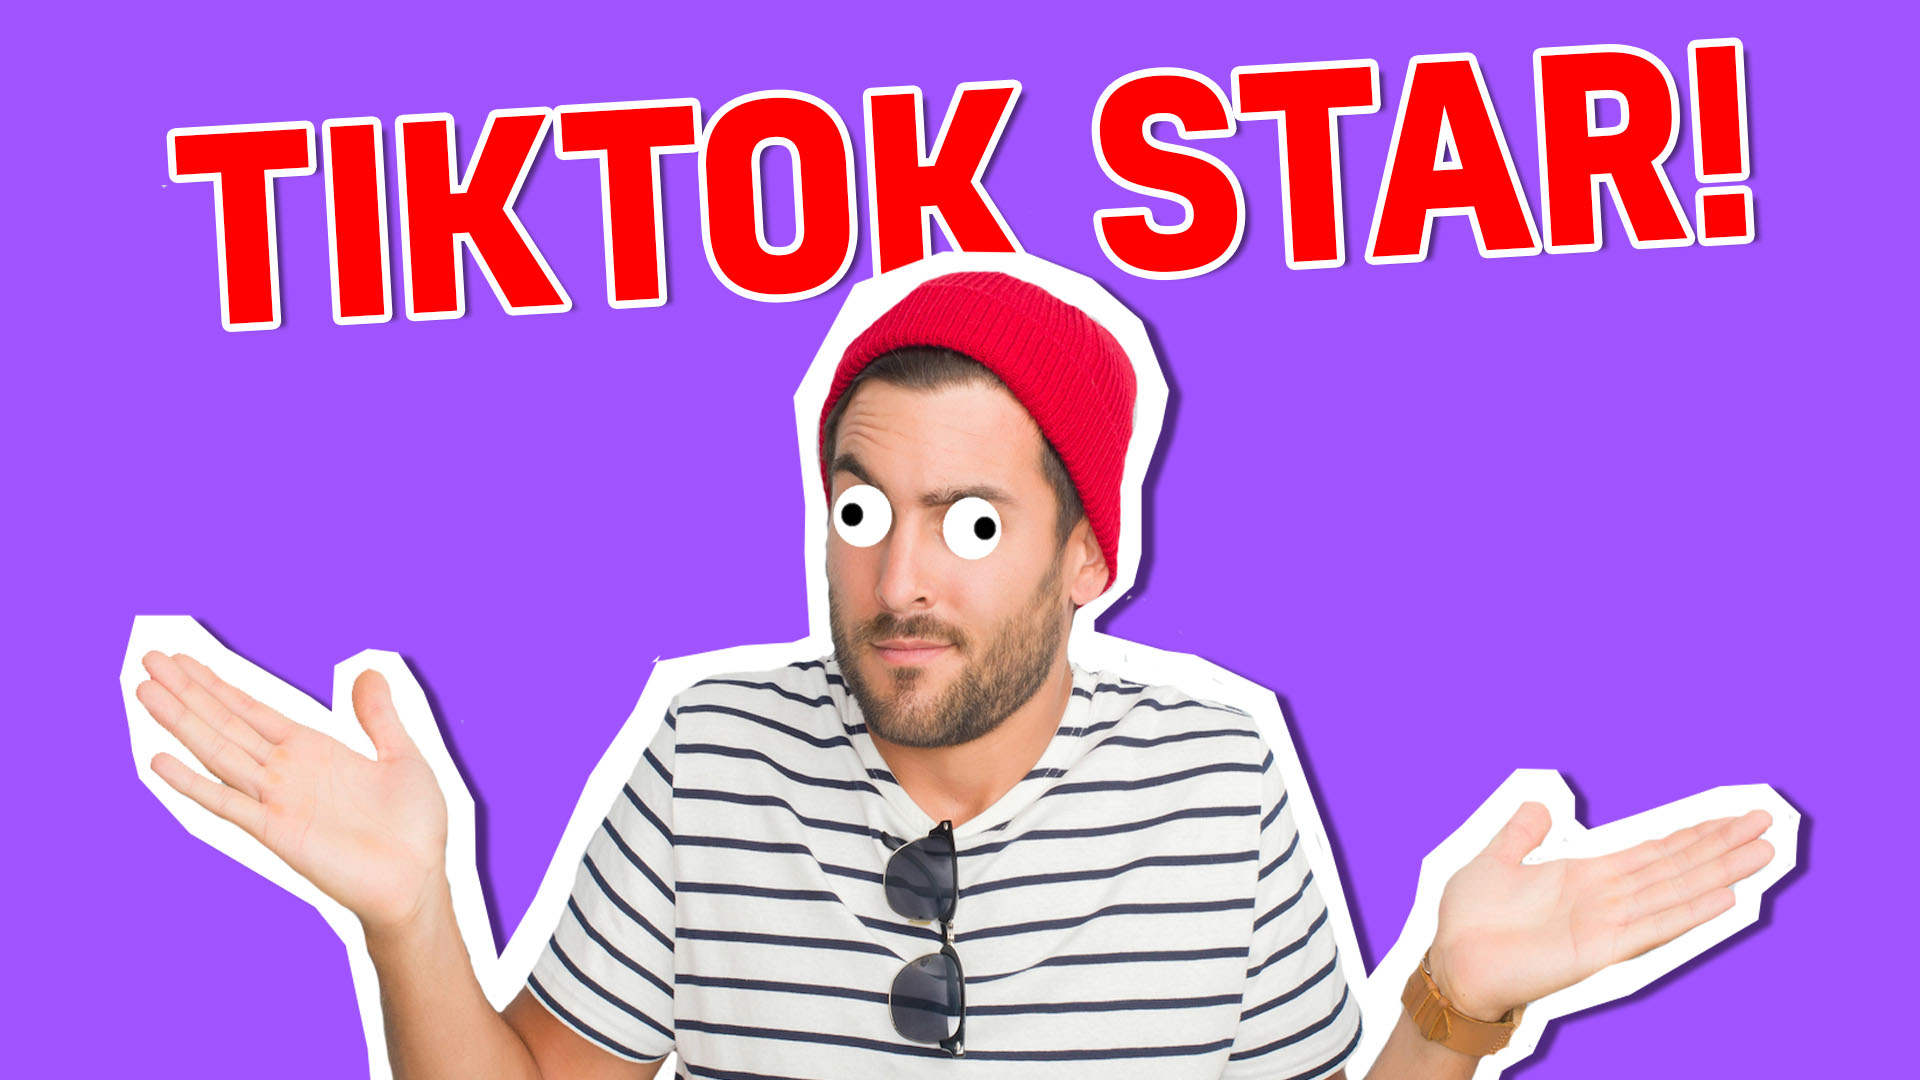 TikTok Star!